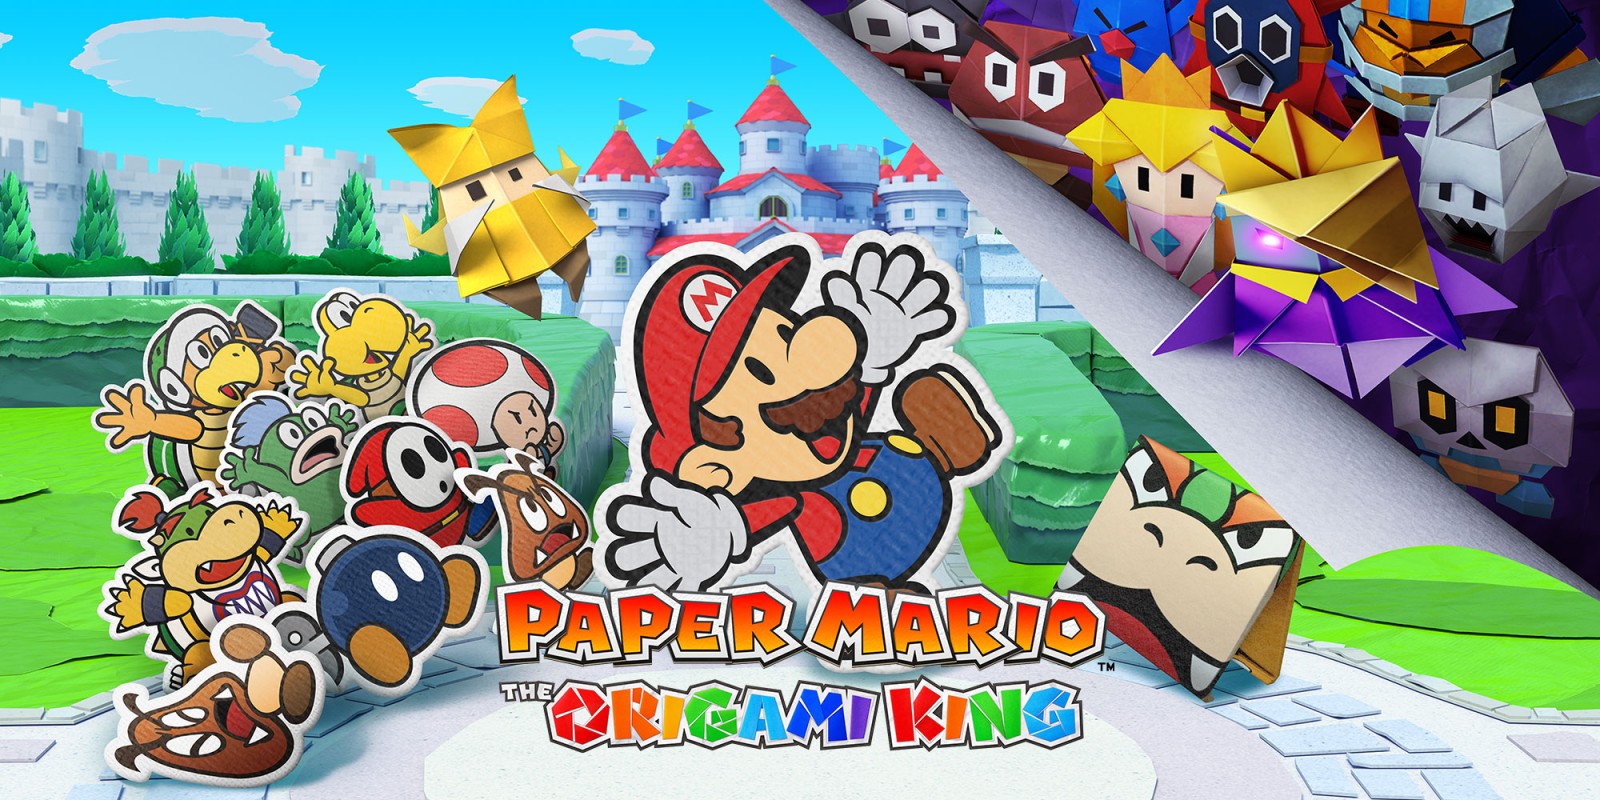 Paper Mario, The Origami King adalah petualangan yang menyeronokkan di atas kertas